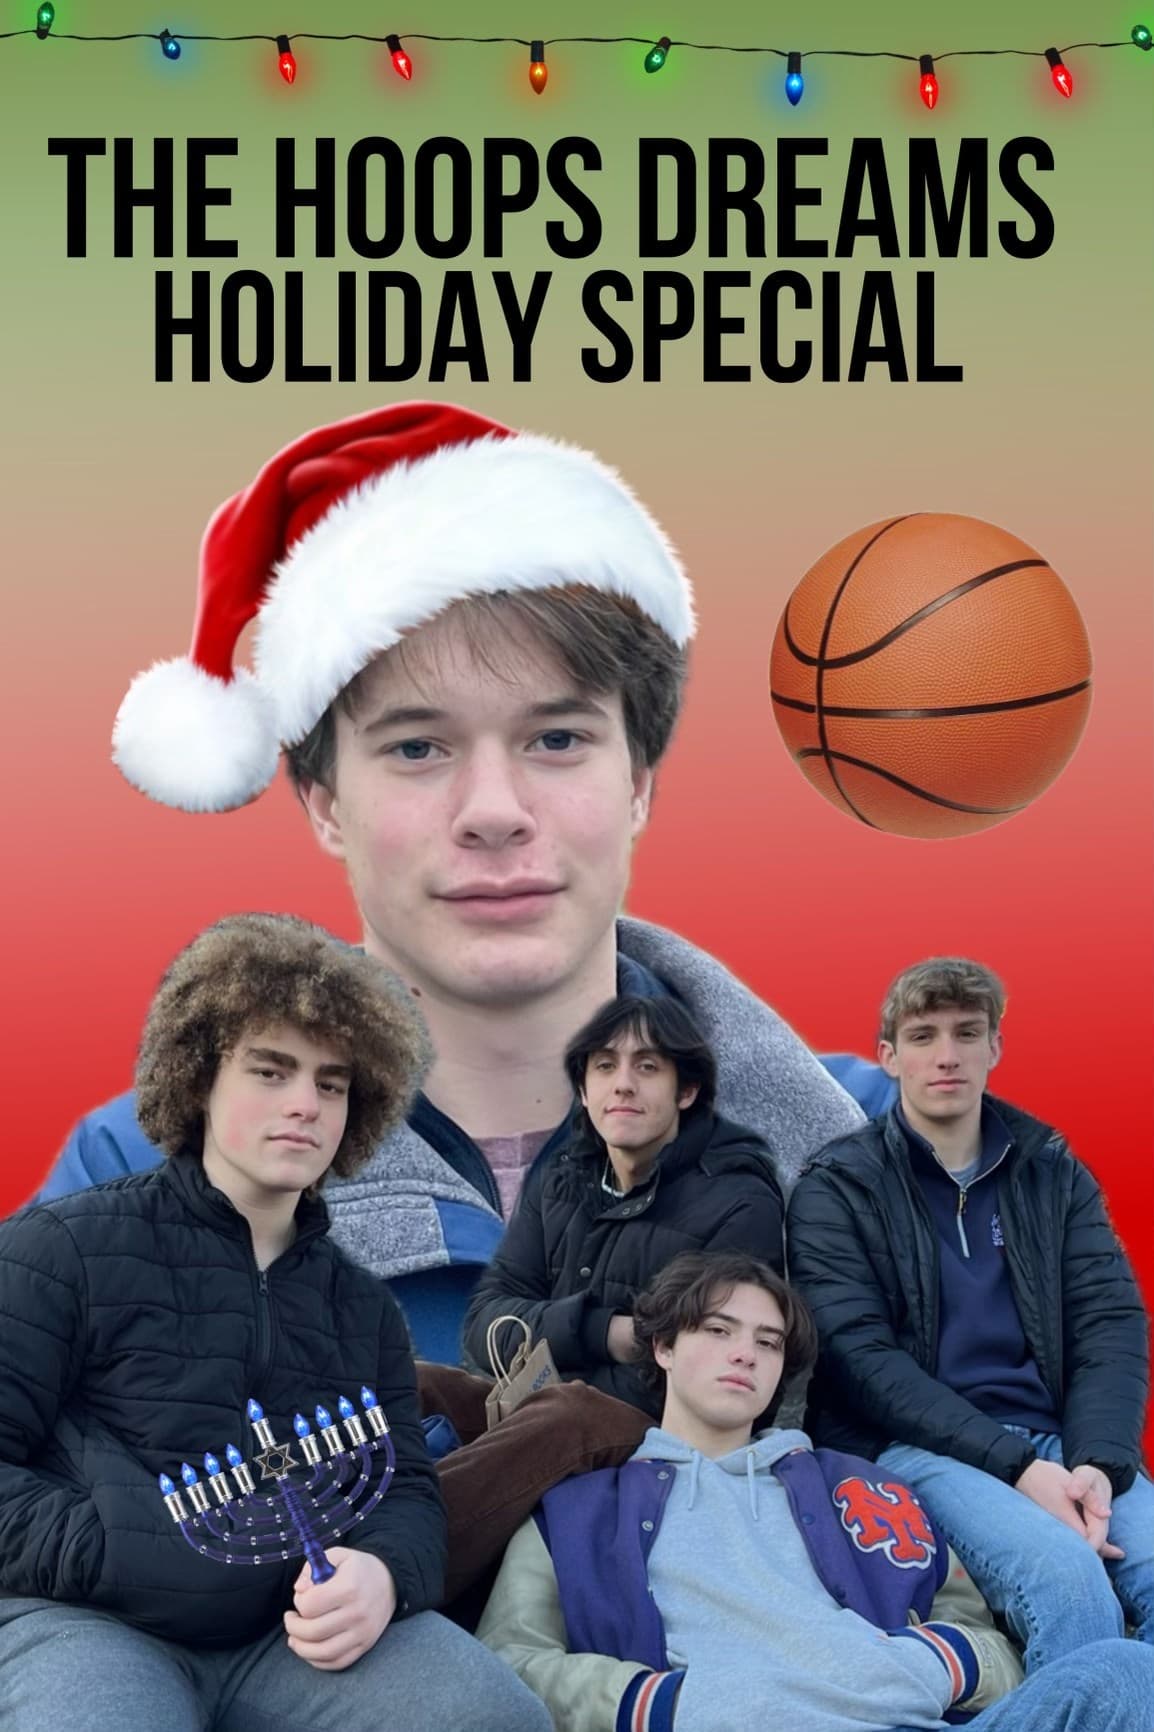 The Hoop Dreams Holiday Special